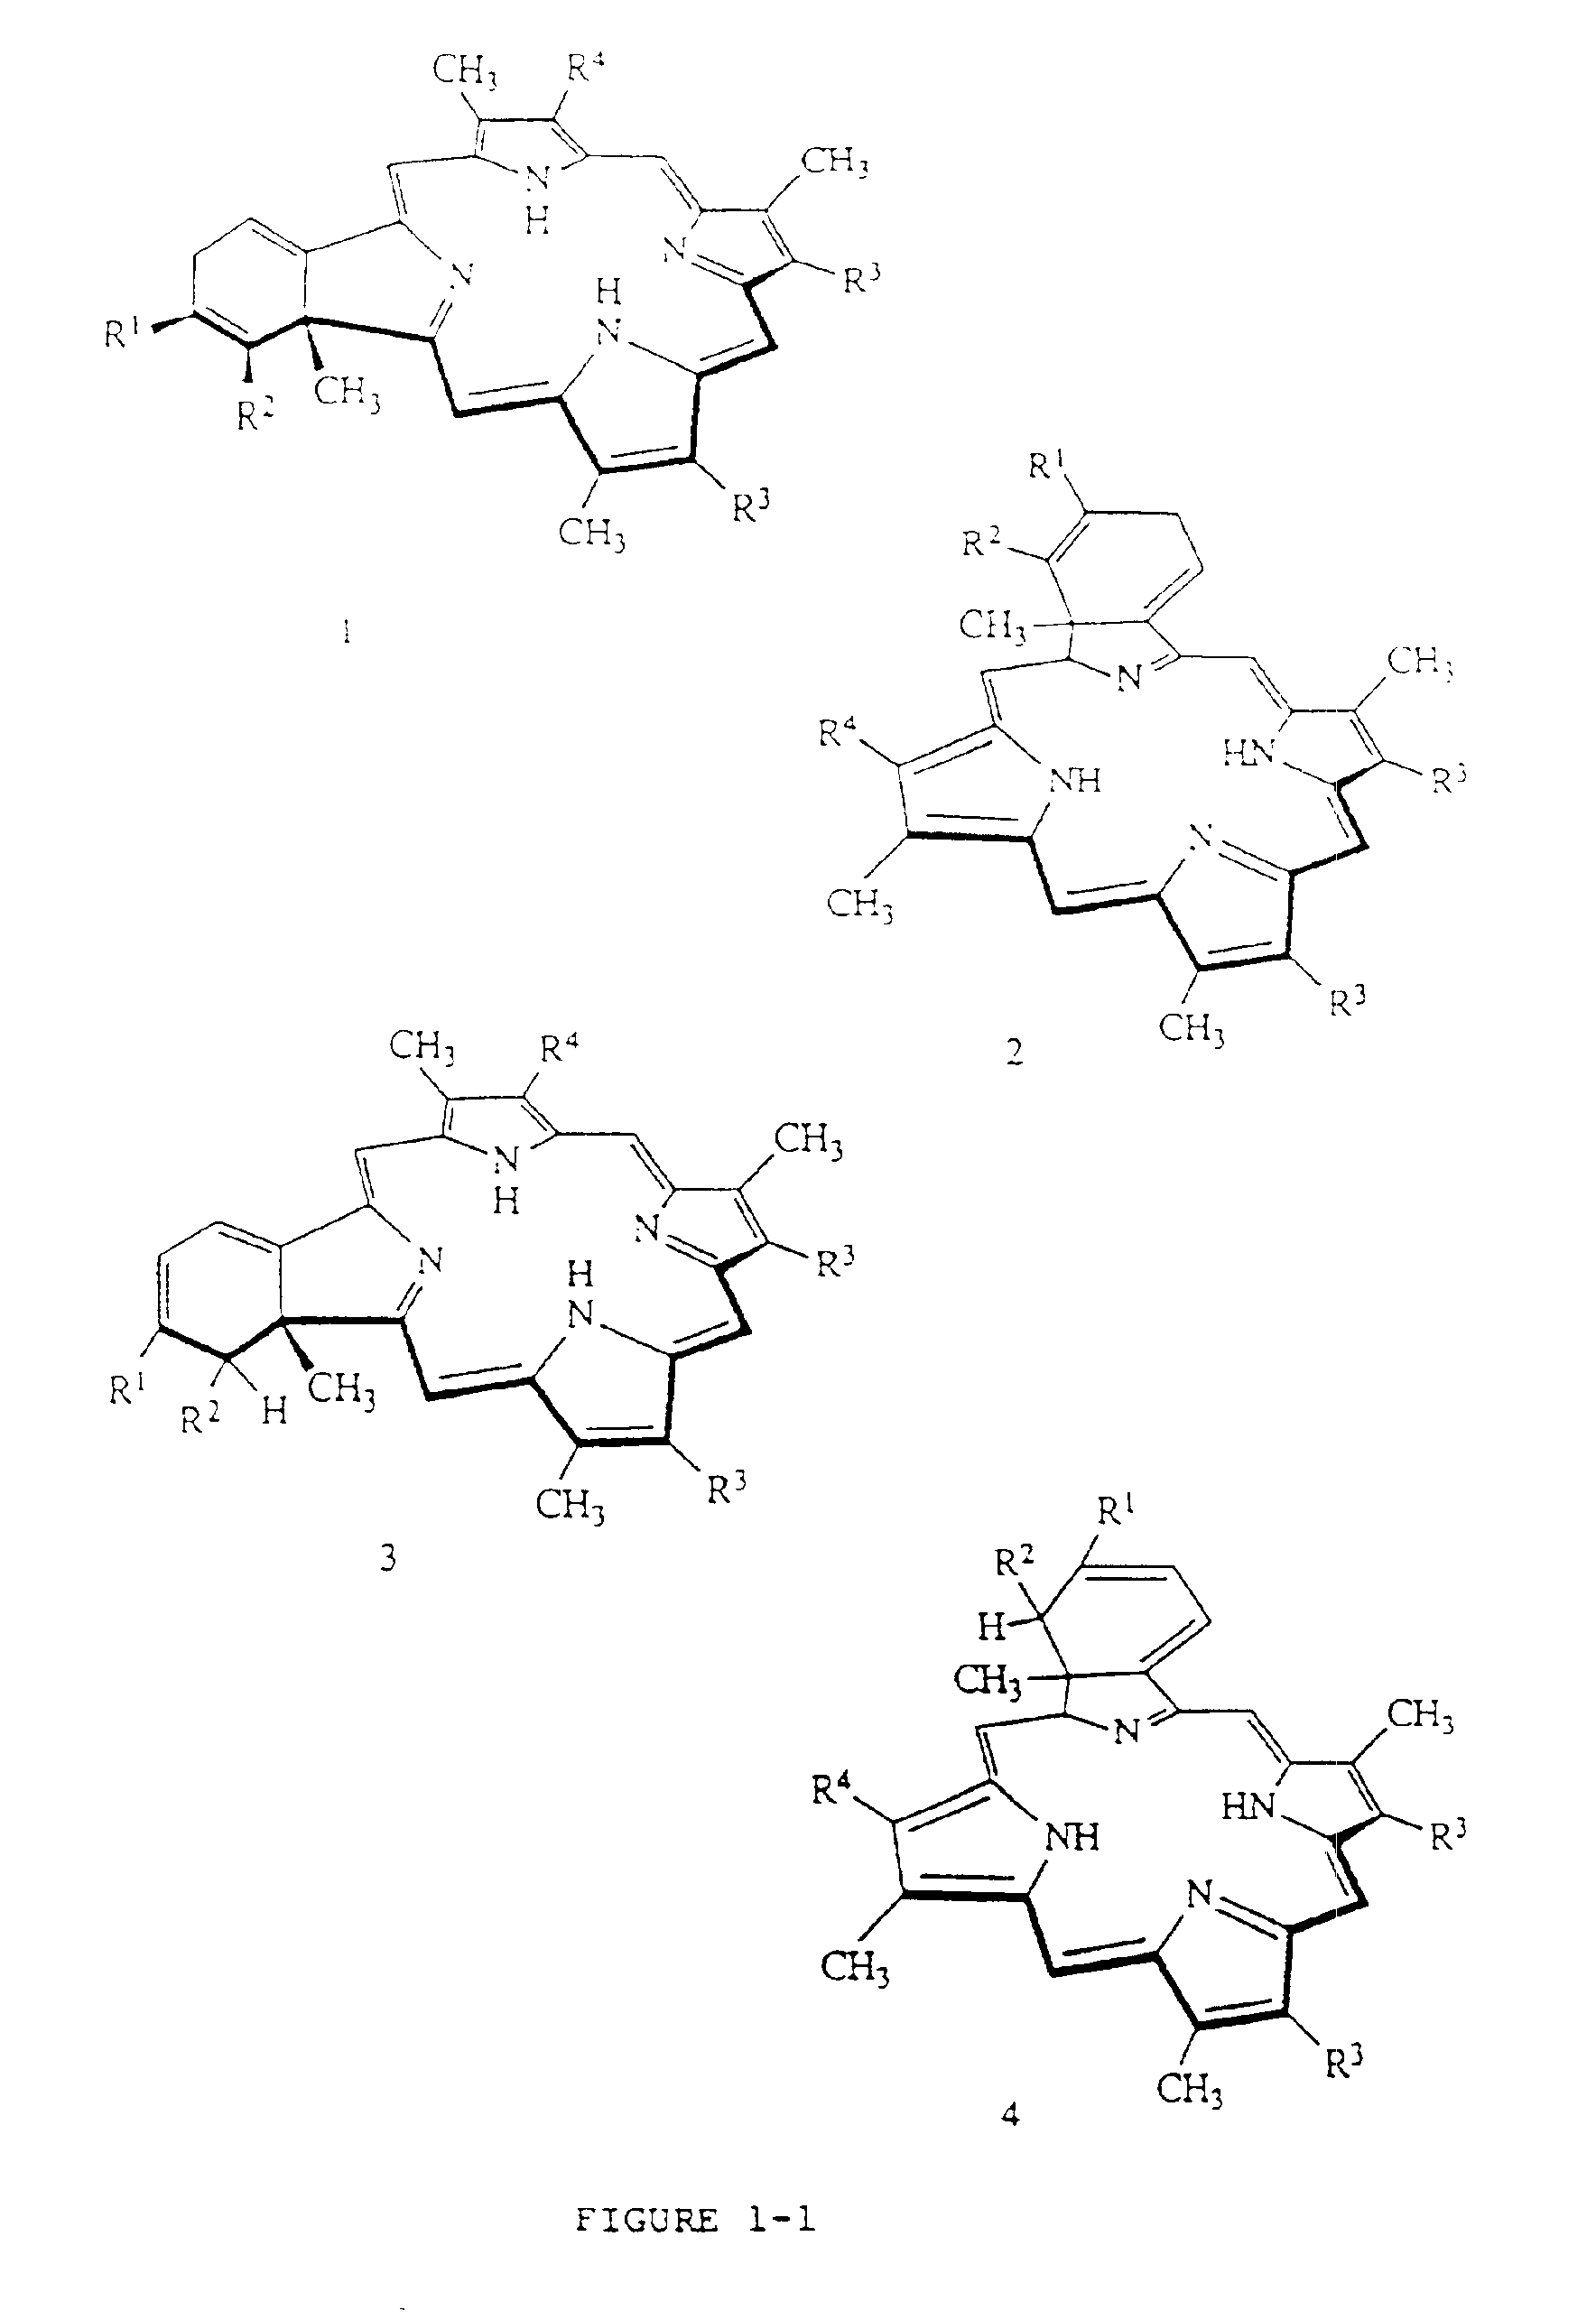 Liposome compositions of porphyrin photosensitizers